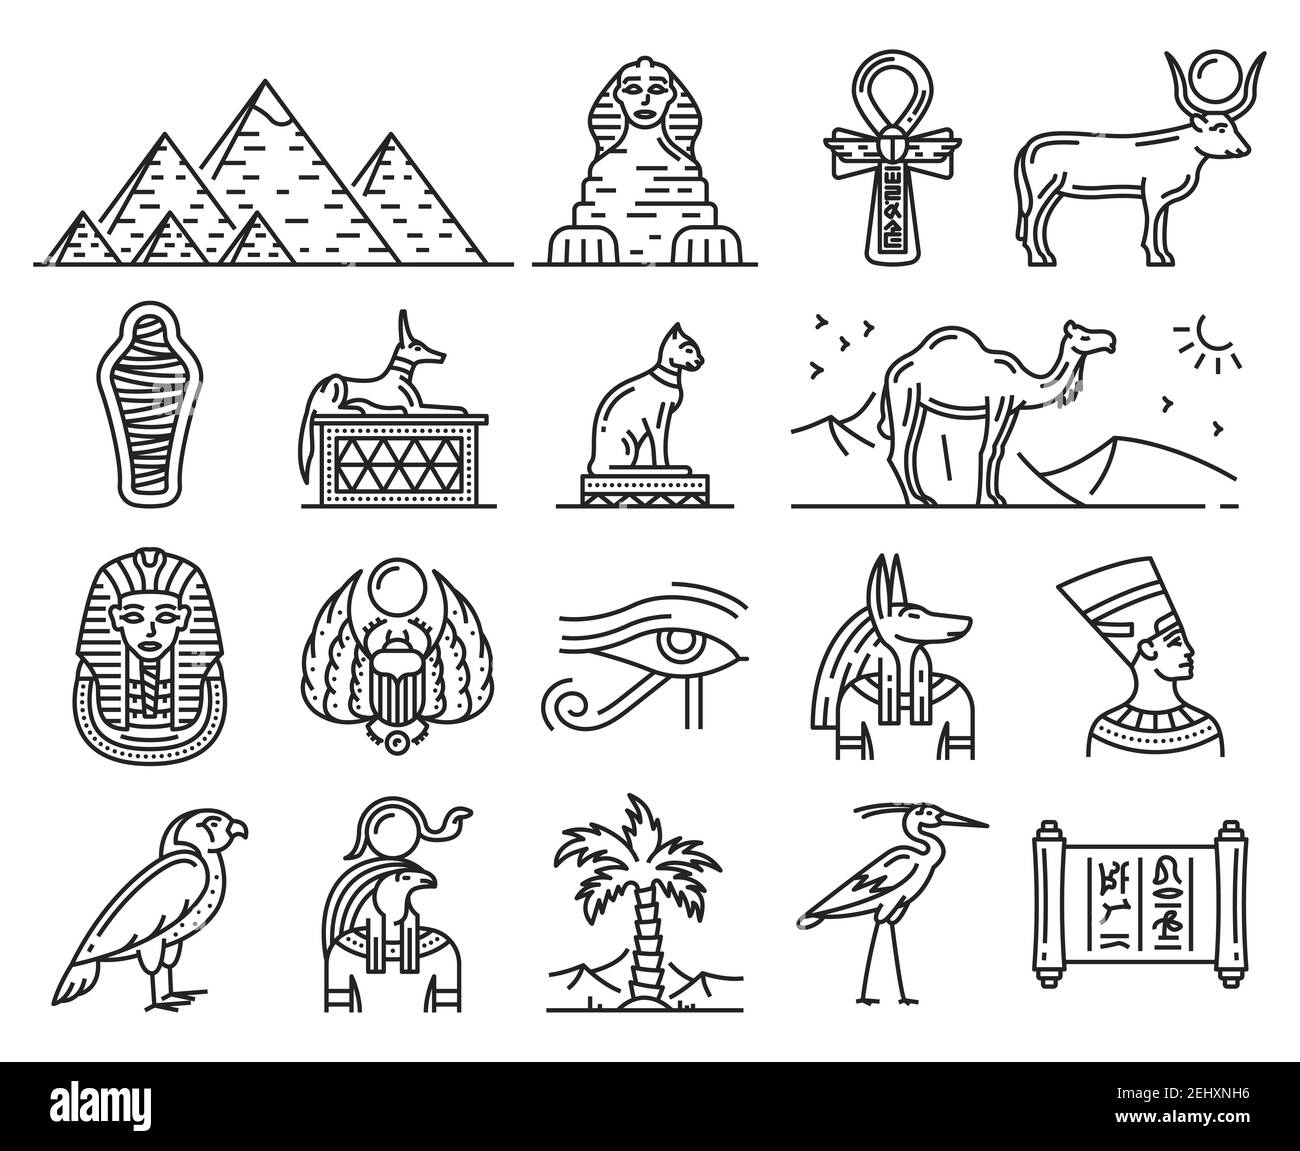 Egypt thin line icons of ancient gods and religion symbols. Sphinx, pharaoh pyramids and Anubis, Ankh, Horus eye and Tutankhamun mummy, cat, hieroglyp Stock Vector